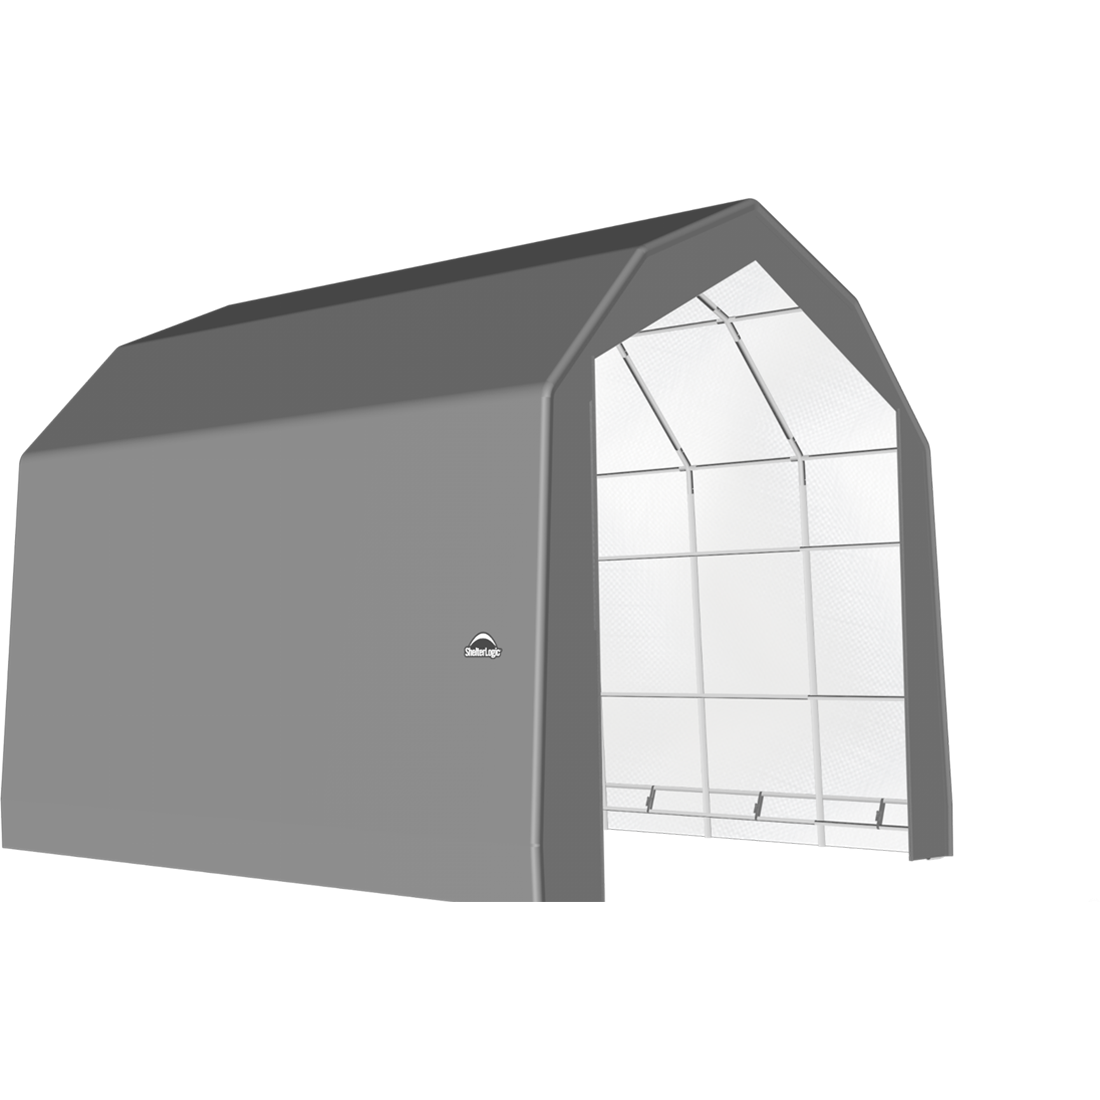 ShelterTech SP Series Barn Shelter, 20 ft. x 20 ft. x 18 ft. Heavy Duty PVC 14.5 oz. Gray